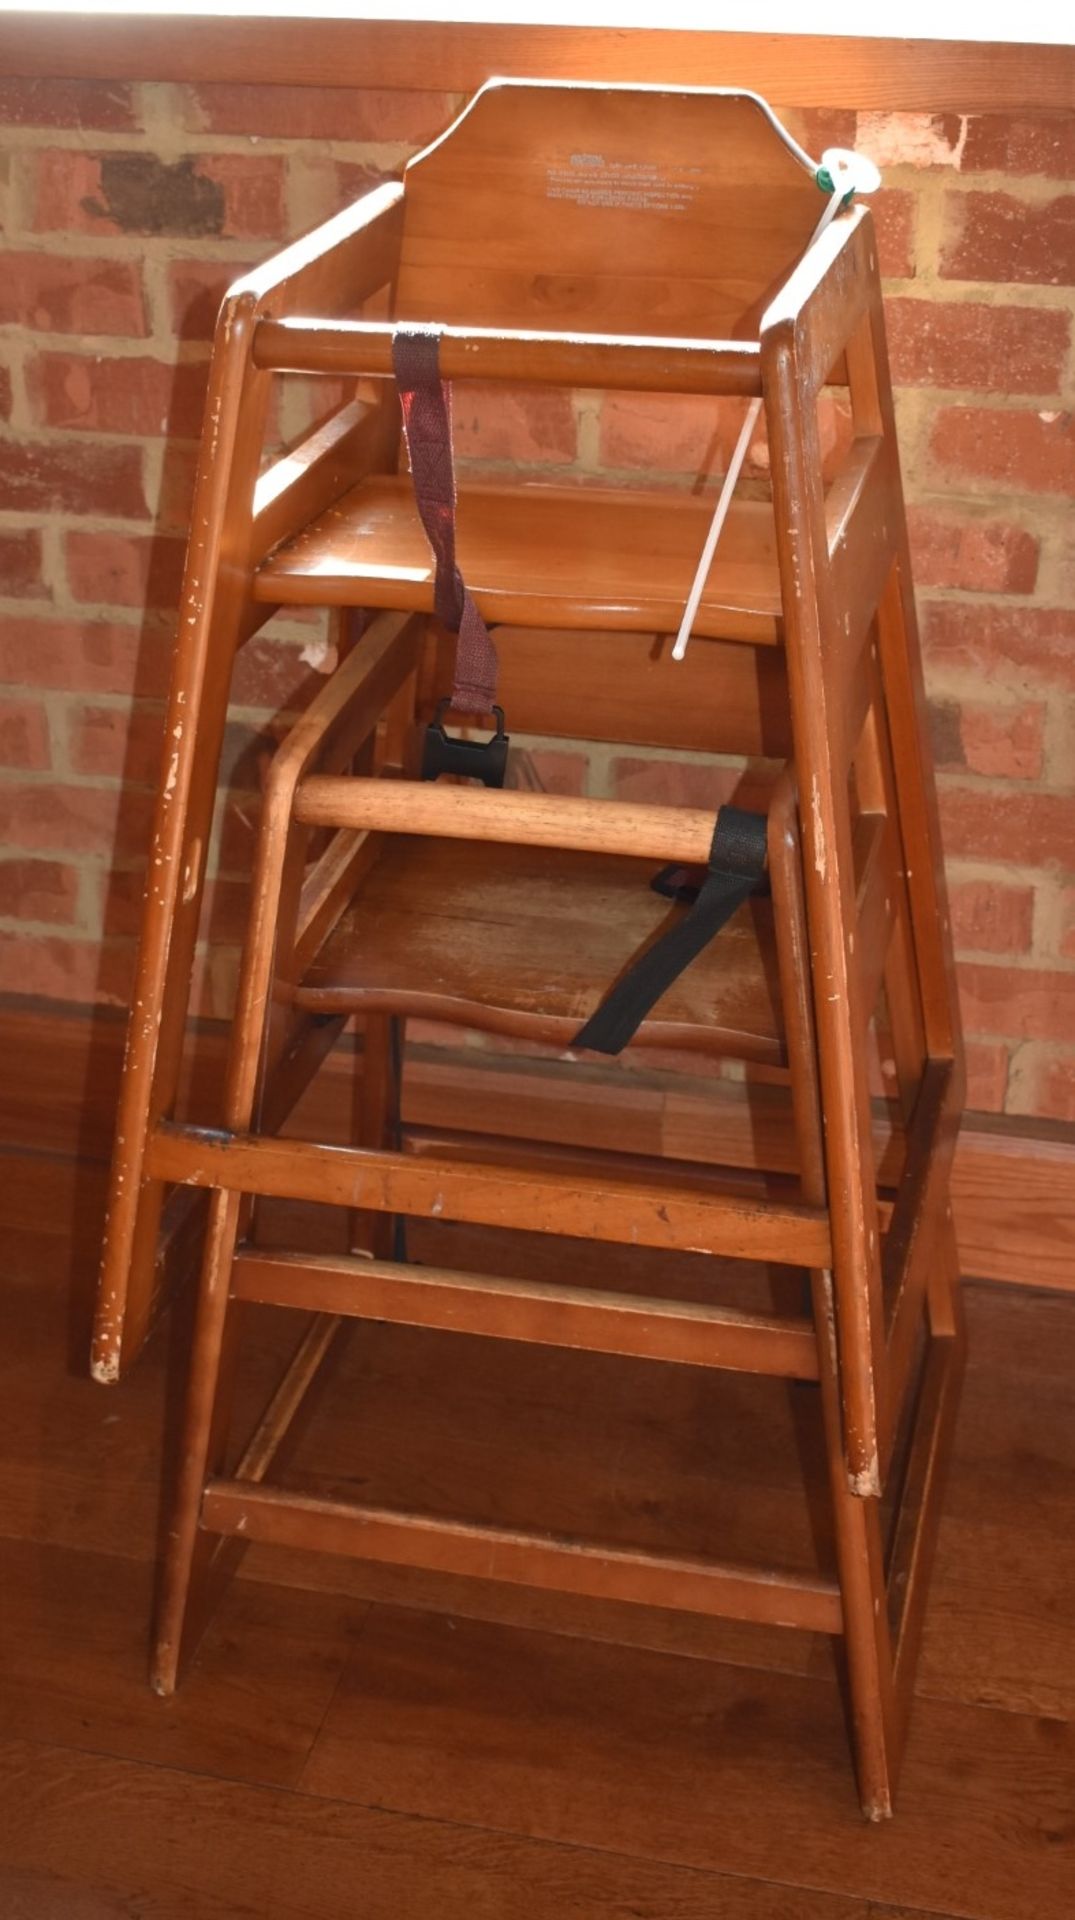 4 x Wooden Restaurant Children's High Chairs - CL499 - Location: London EN1 - Image 3 of 4